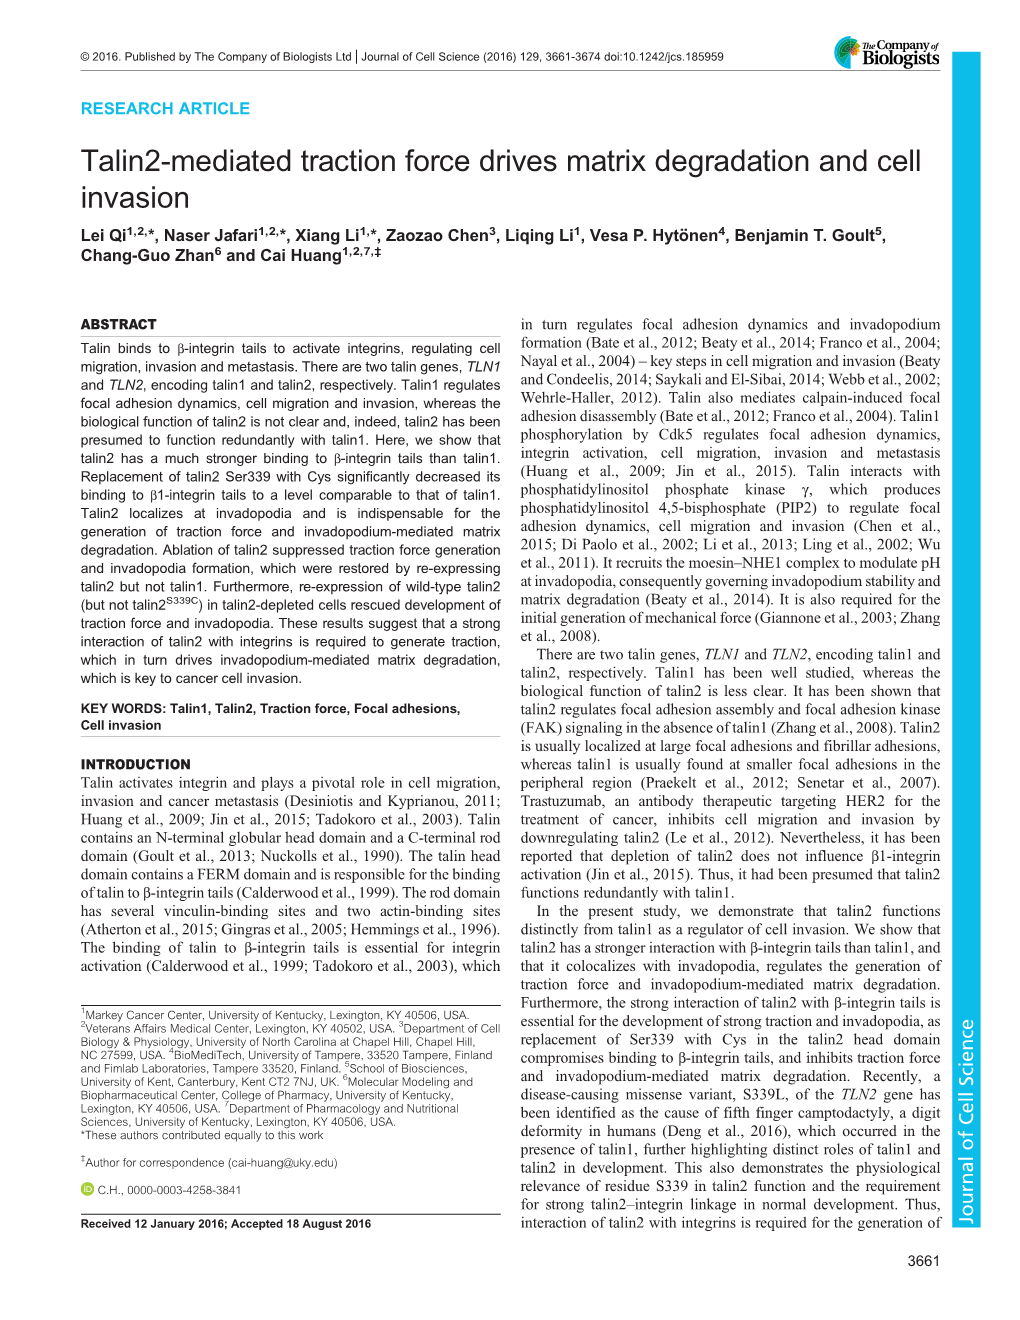 Talin2-Mediated Traction Force Drives Matrix Degradation and Cell Invasion Lei Qi1,2,*, Naser Jafari1,2,*, Xiang Li1,*, Zaozao Chen3, Liqing Li1, Vesa P